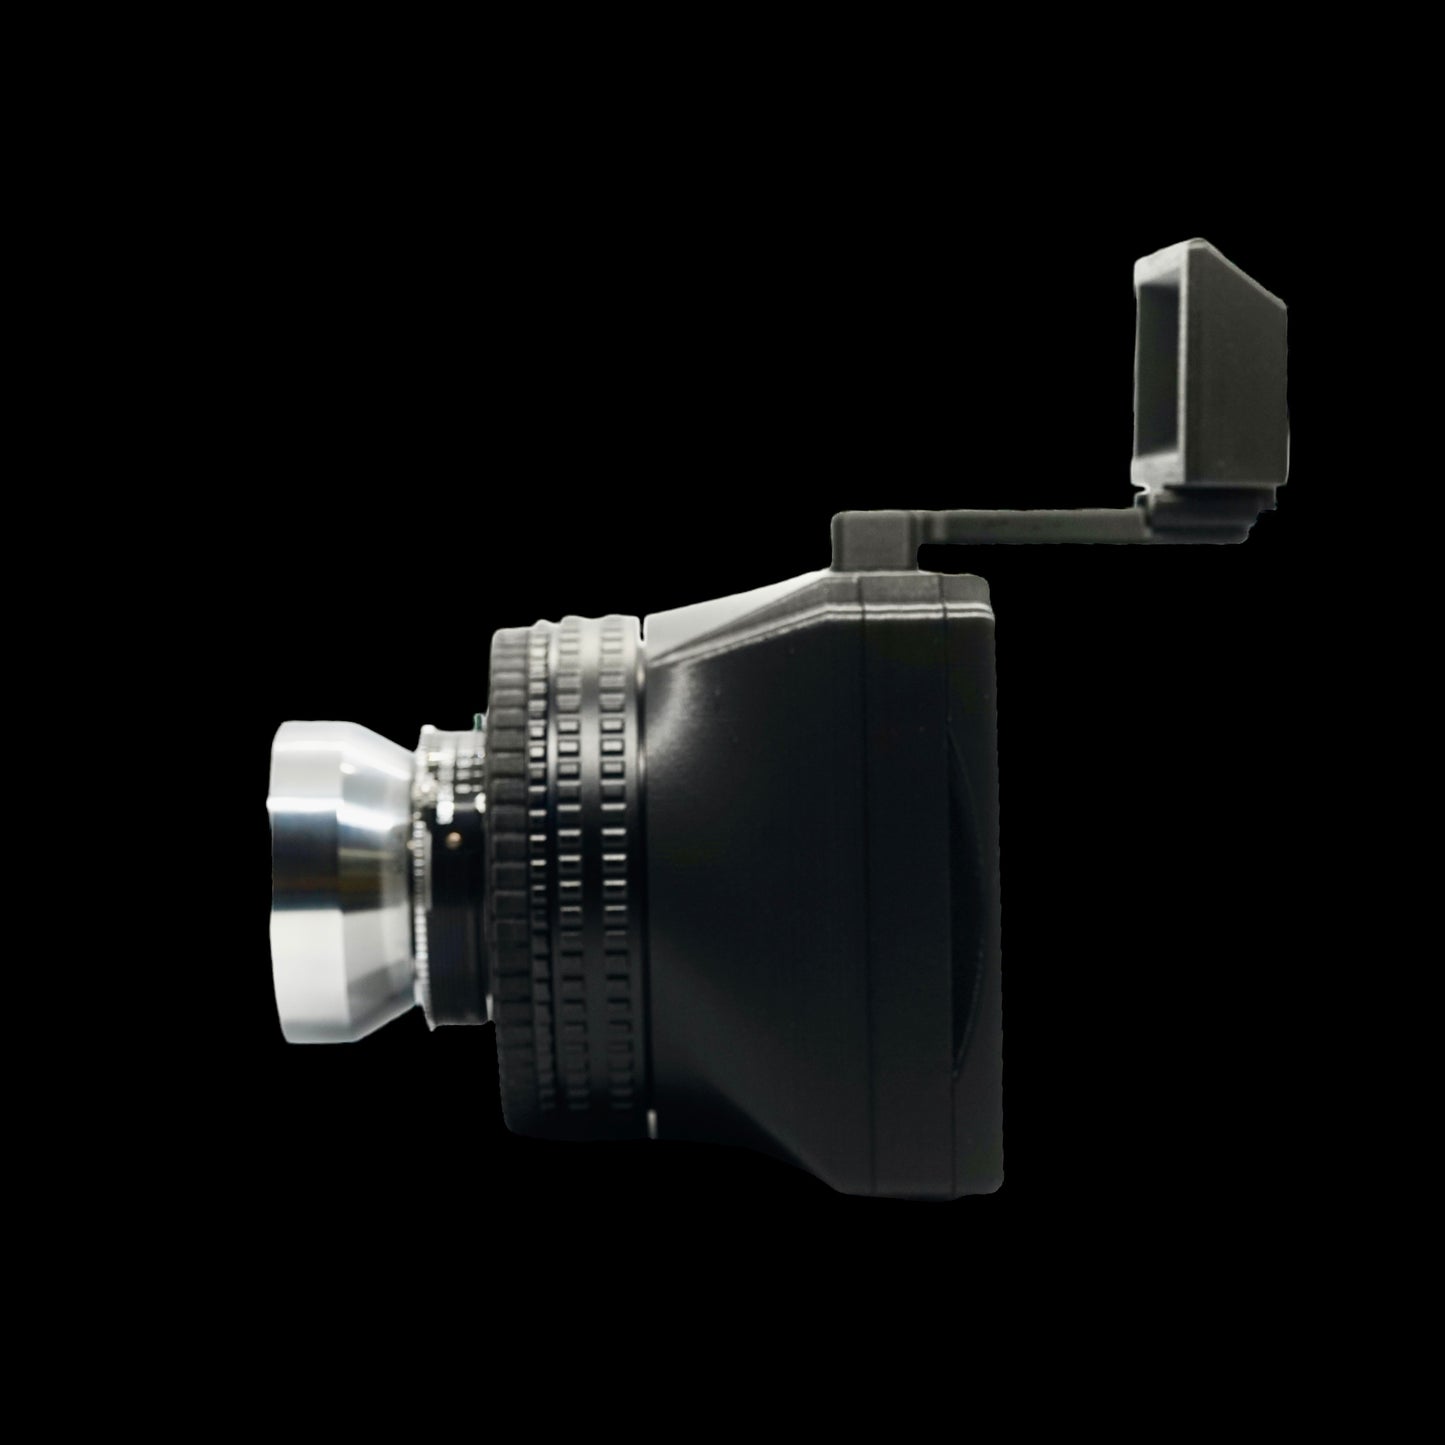 6x6 Medium Format System with Schneider 65mm F8 lens